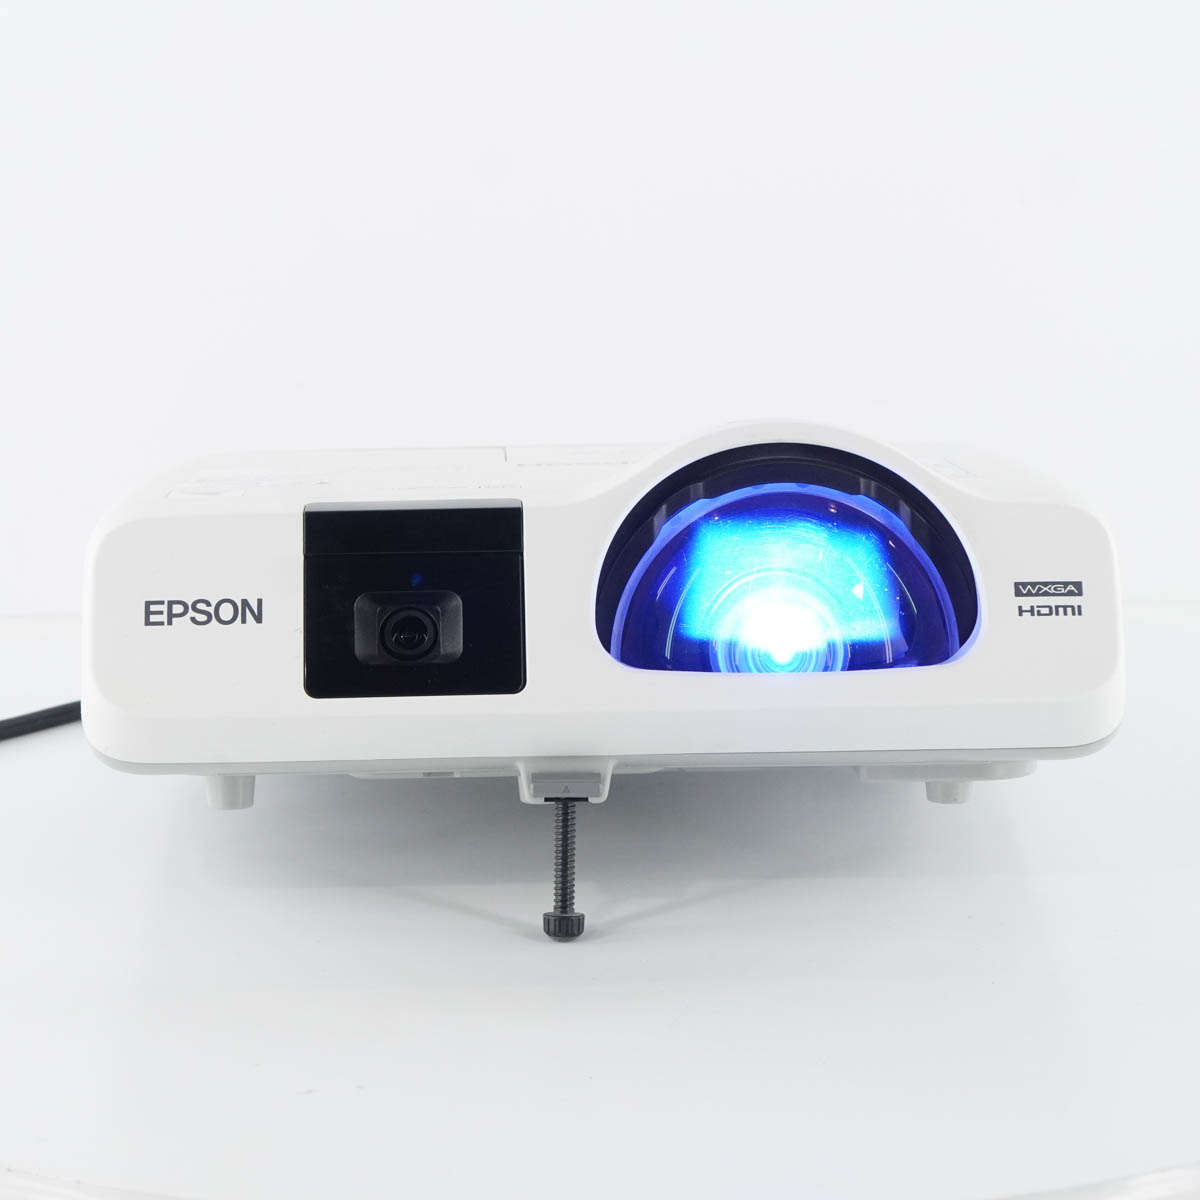 PG]USED 8日保証 ランプ438時間 EPSON EB-536WT H670D プロジェクター